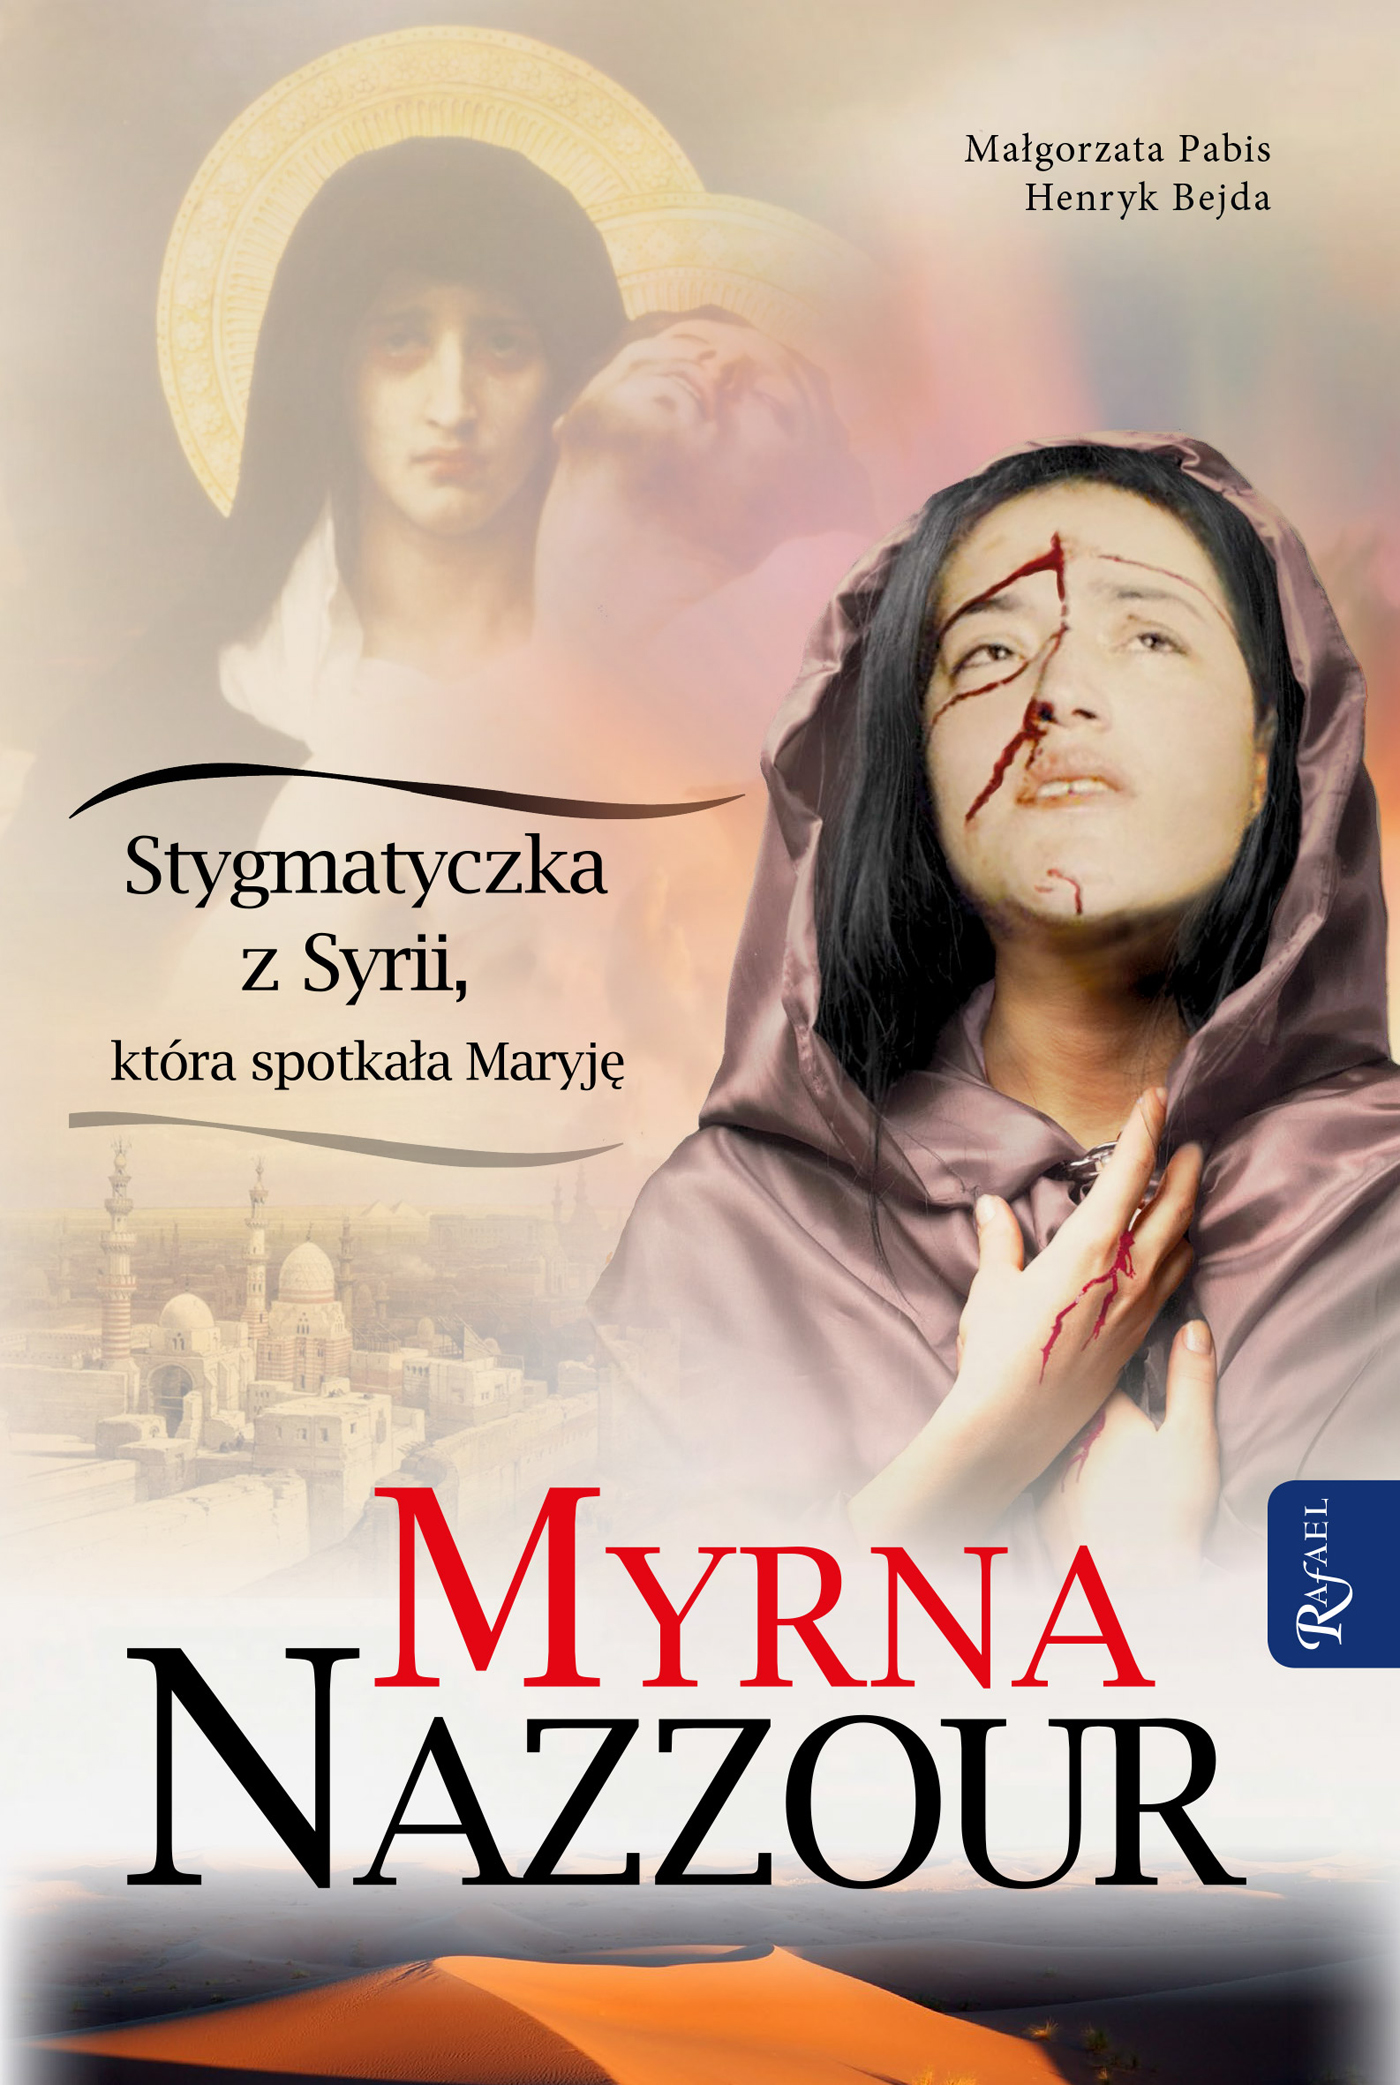 Myrna Nazzour